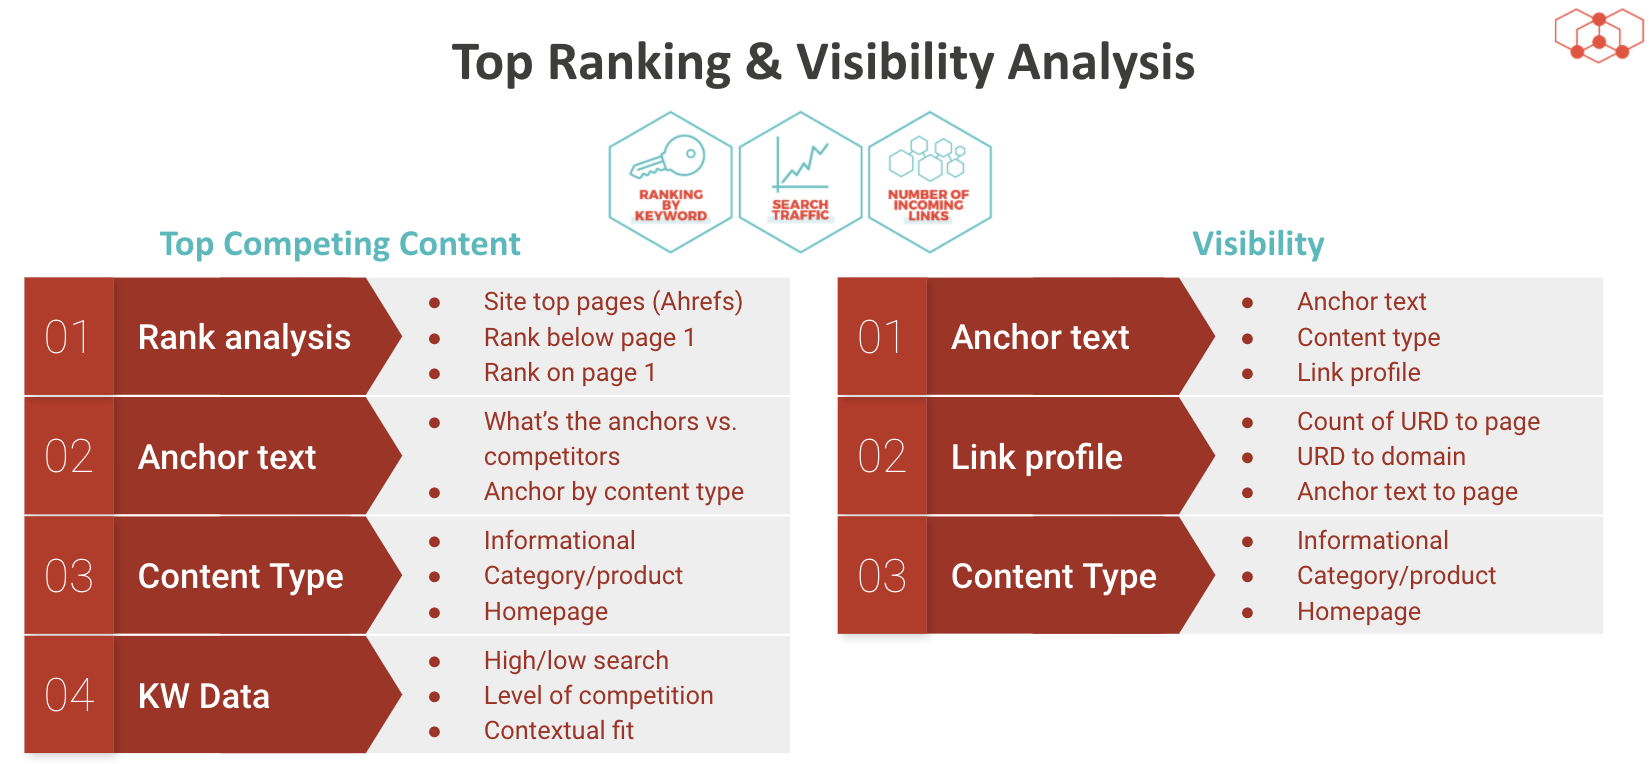 Top Ranking & VIsibility Analysis